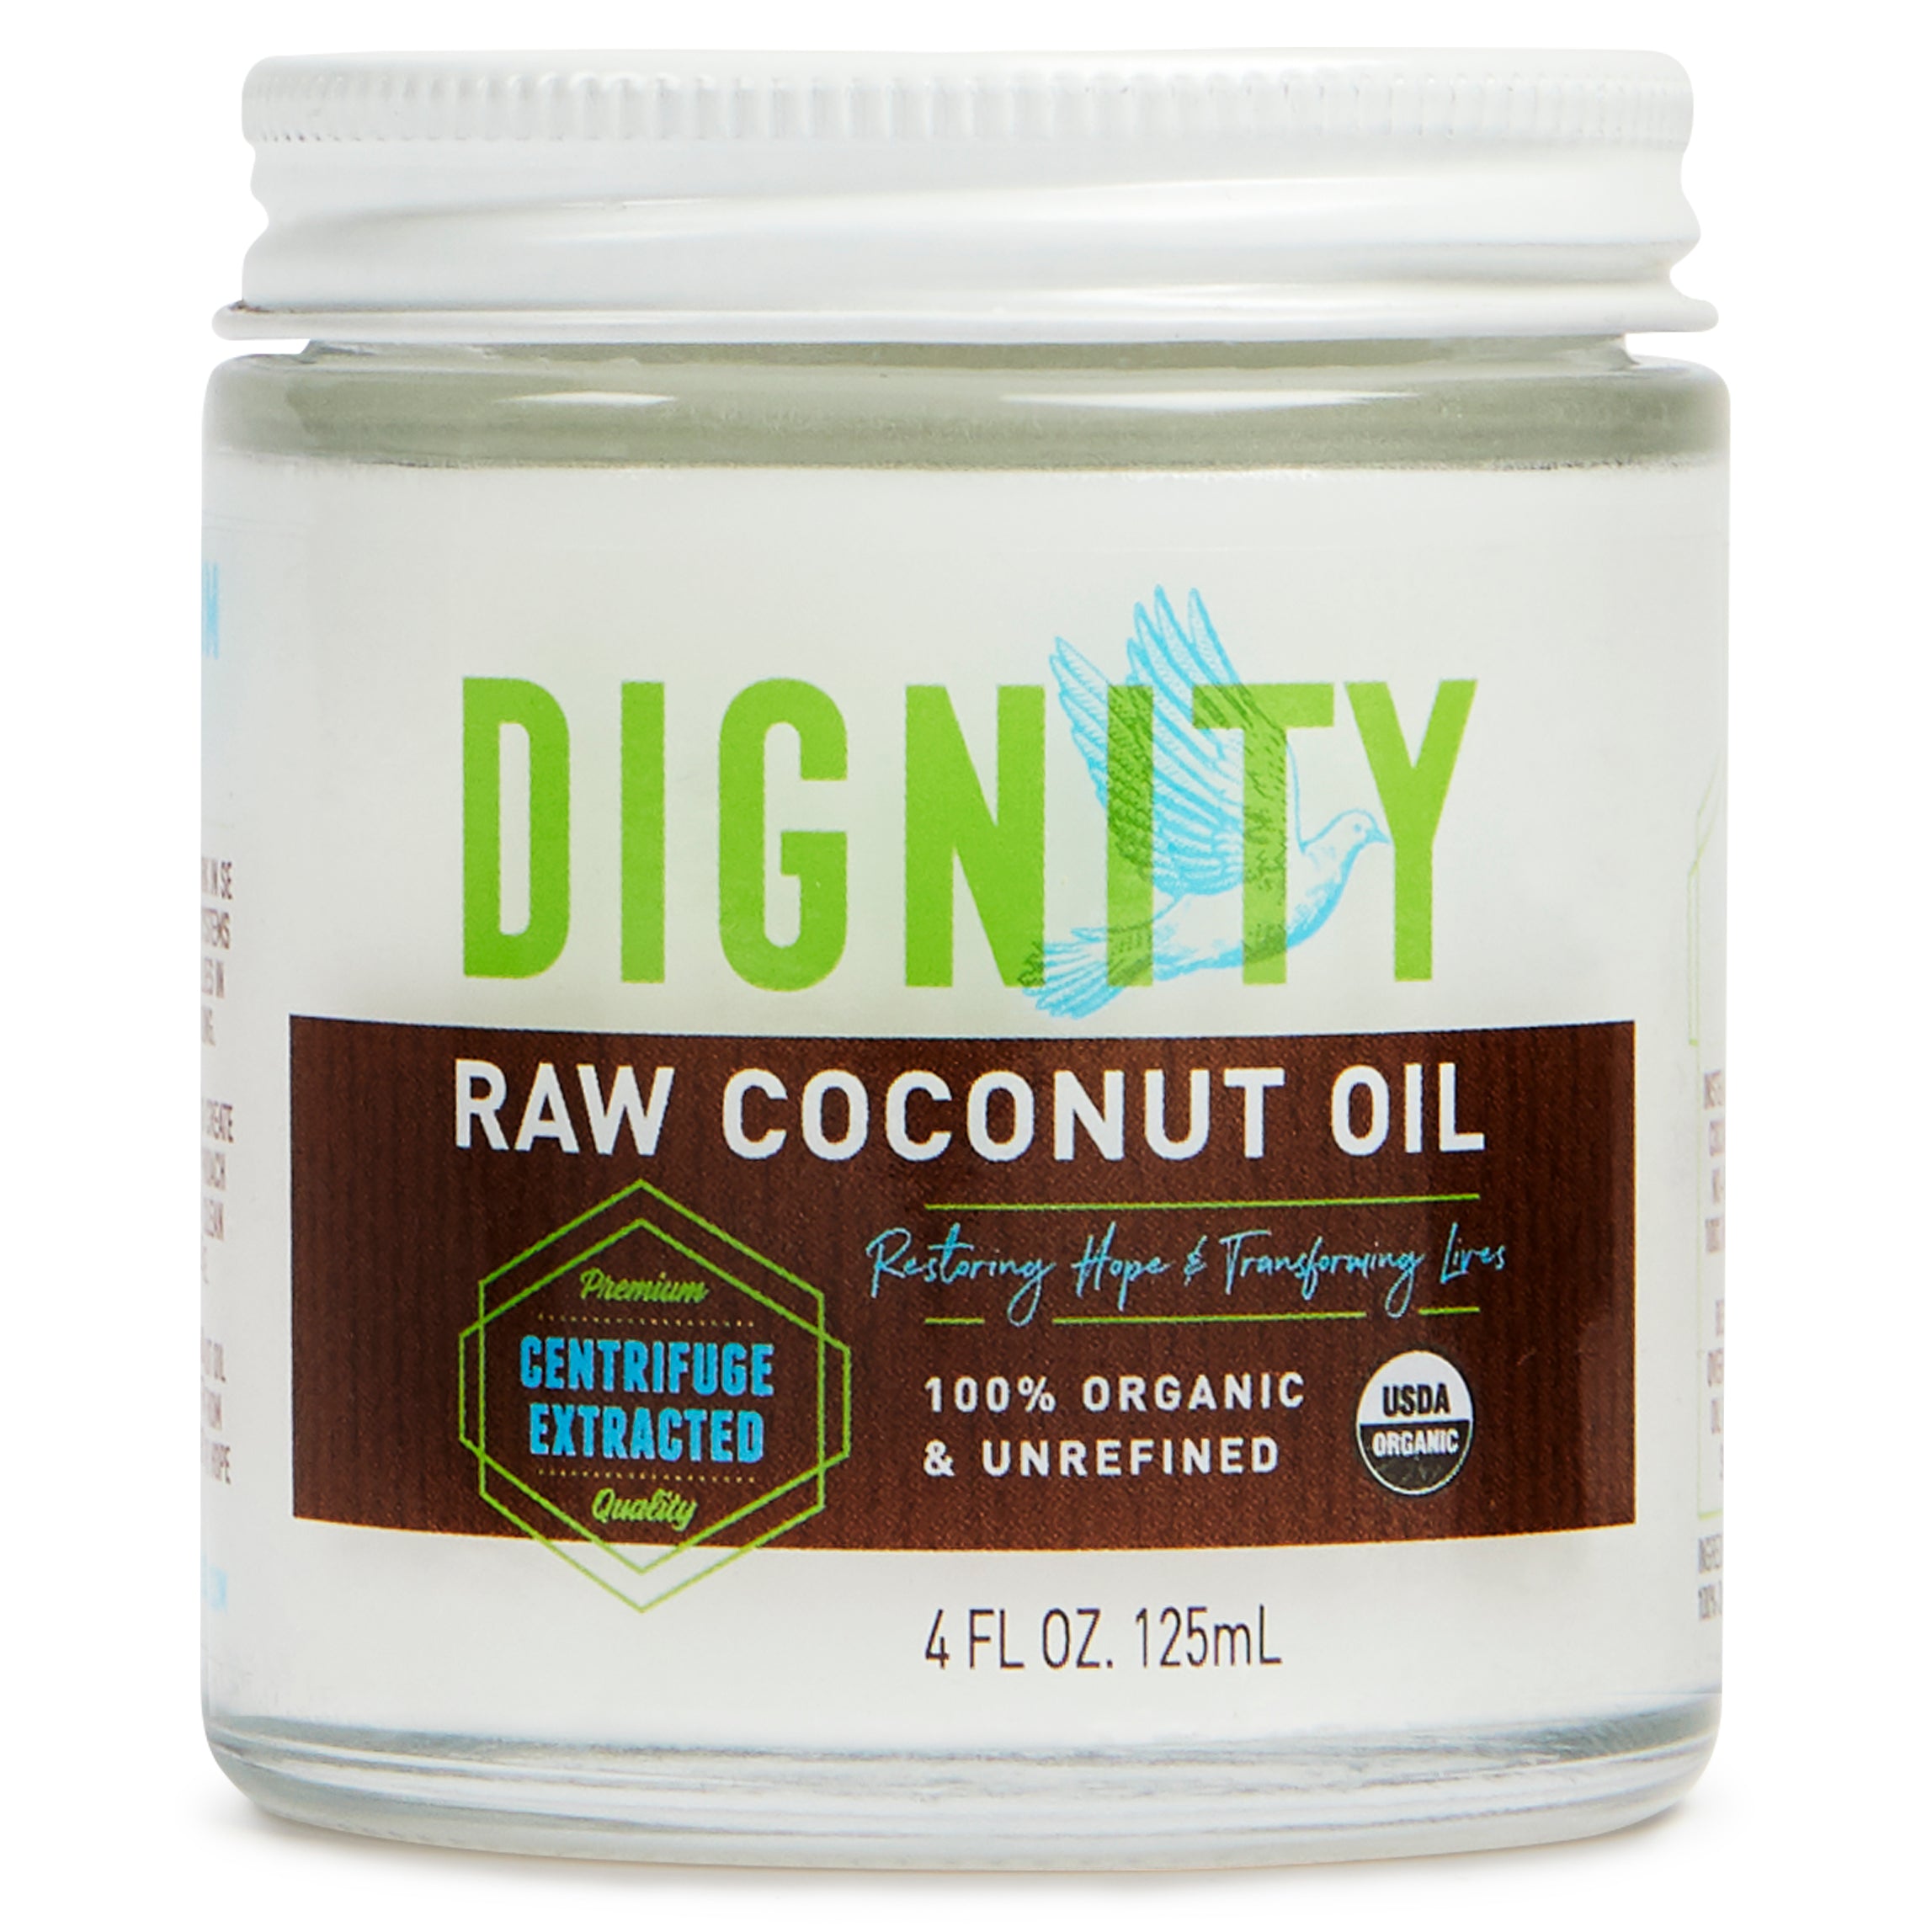 Raw, Organic Coconut Oil - Dignity Coconuts